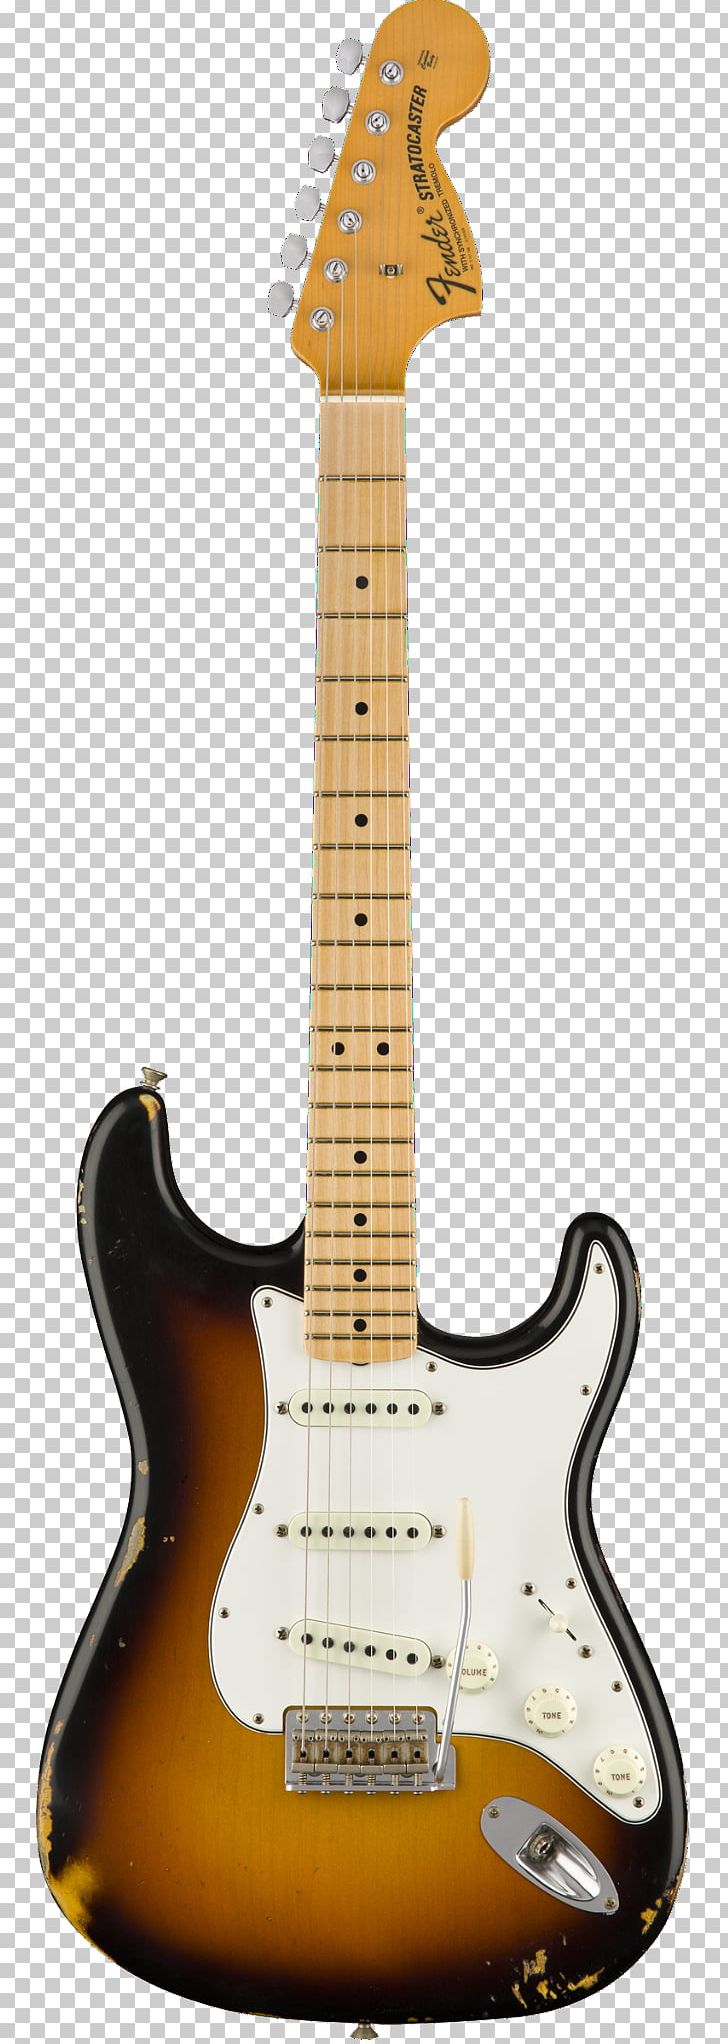 Fender Stratocaster Fender Standard Stratocaster Fender Musical Instruments Corporation Sunburst PNG, Clipart, Acoustic Electric Guitar, Guitar, Guitar Accessory, Jazz Guitarist, Music Free PNG Download